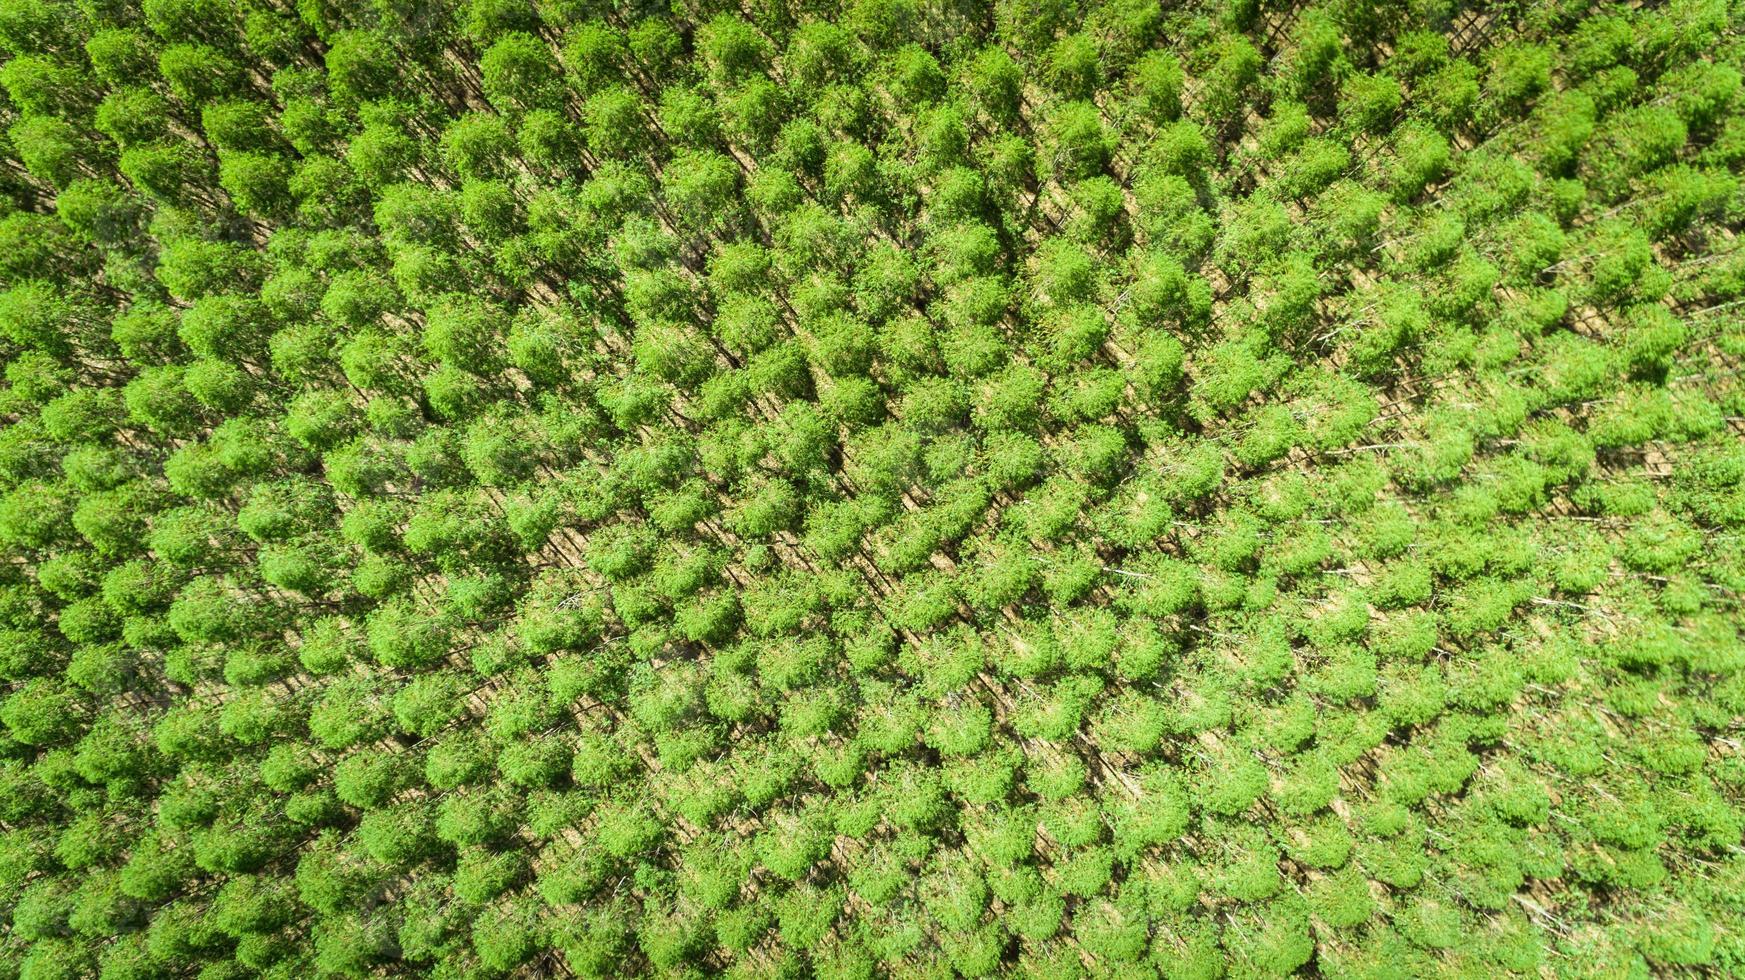 plantación de eucaliptos en brasil - agricultura de papel de celulosa - vista de drones de ojo de pájaro. vista superior. foto